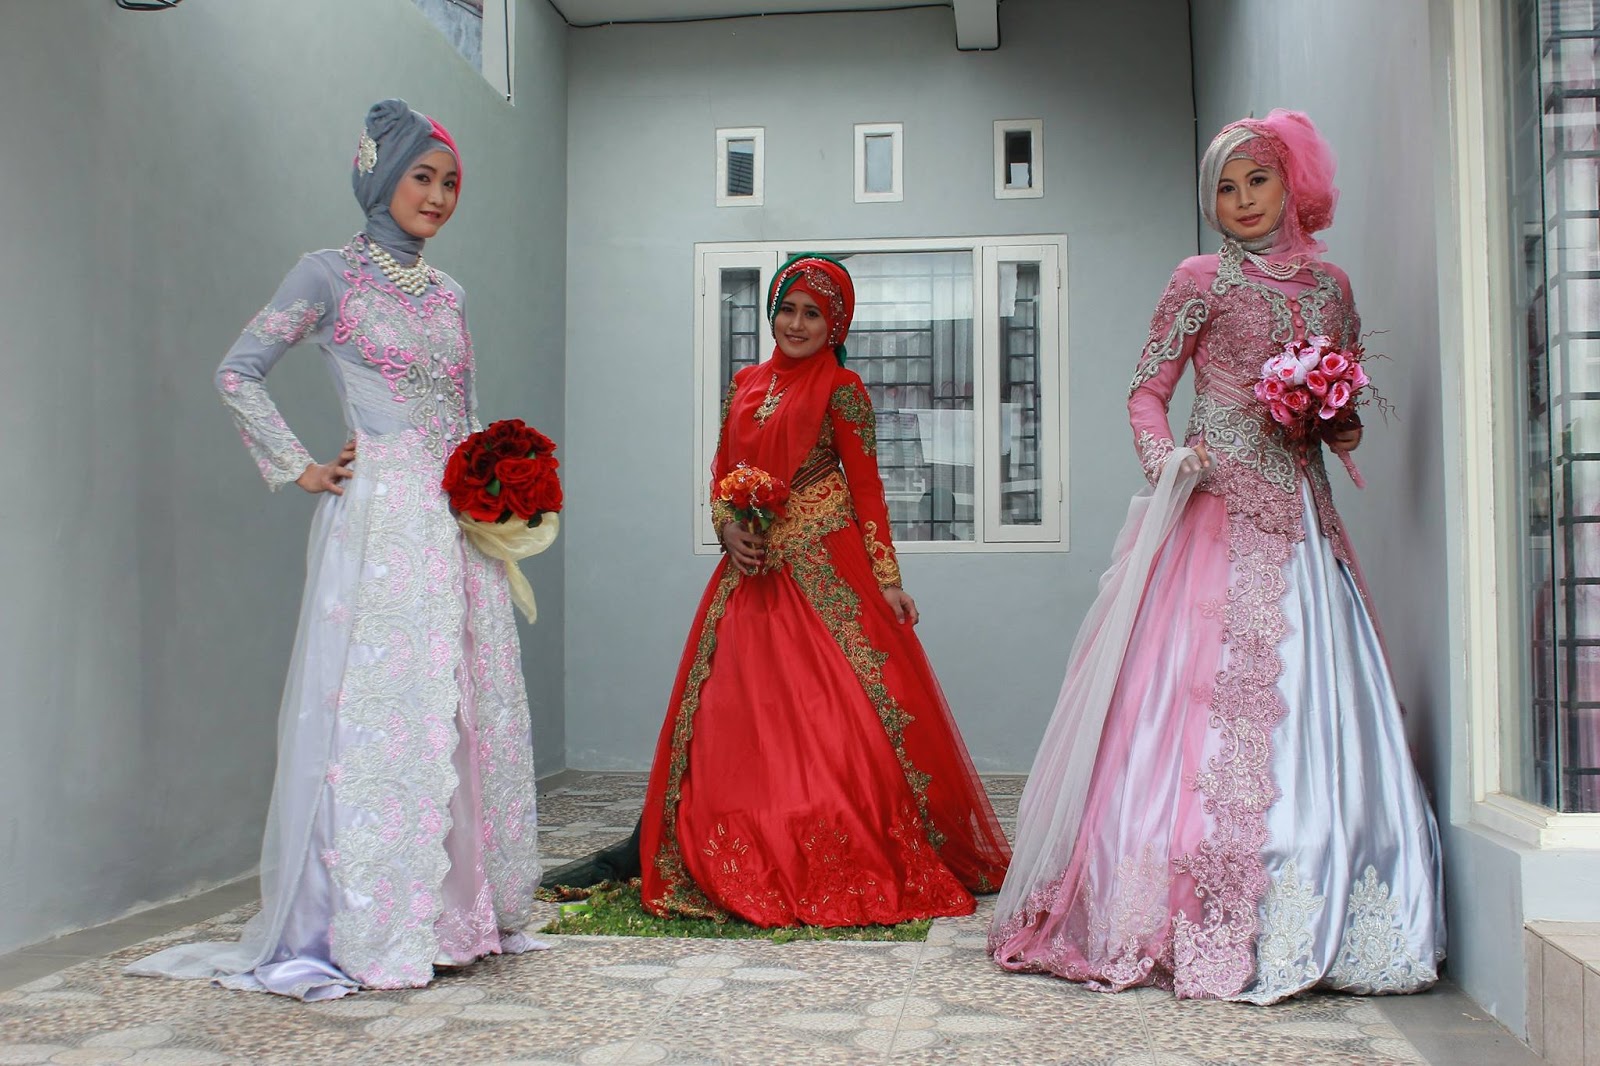 Azka Wedding Makassar